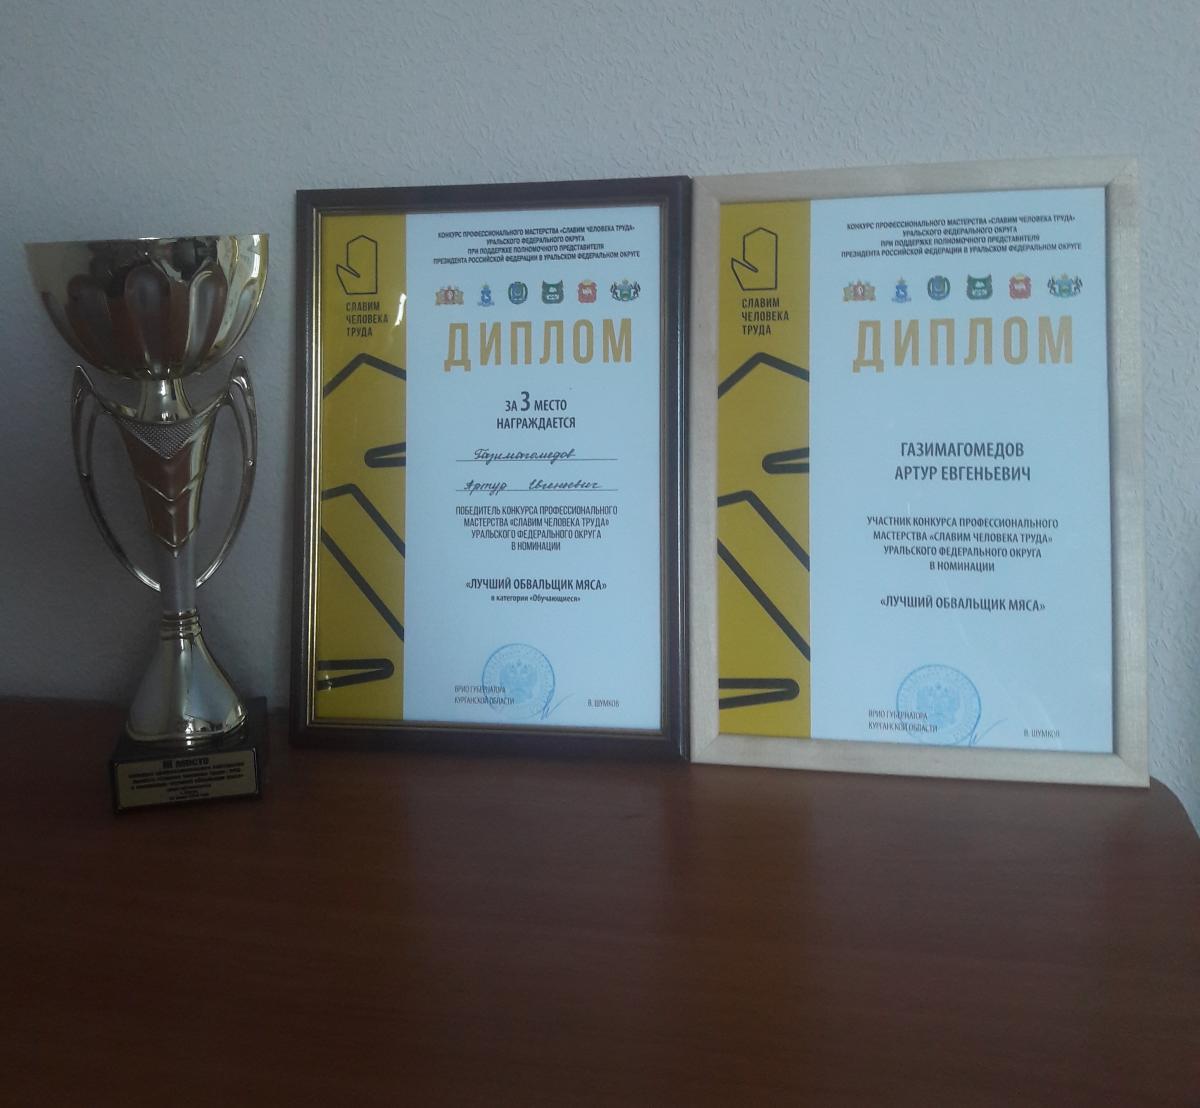 Победа студента СГАУ во Всероссийском конкурсе «Славим человека труда»